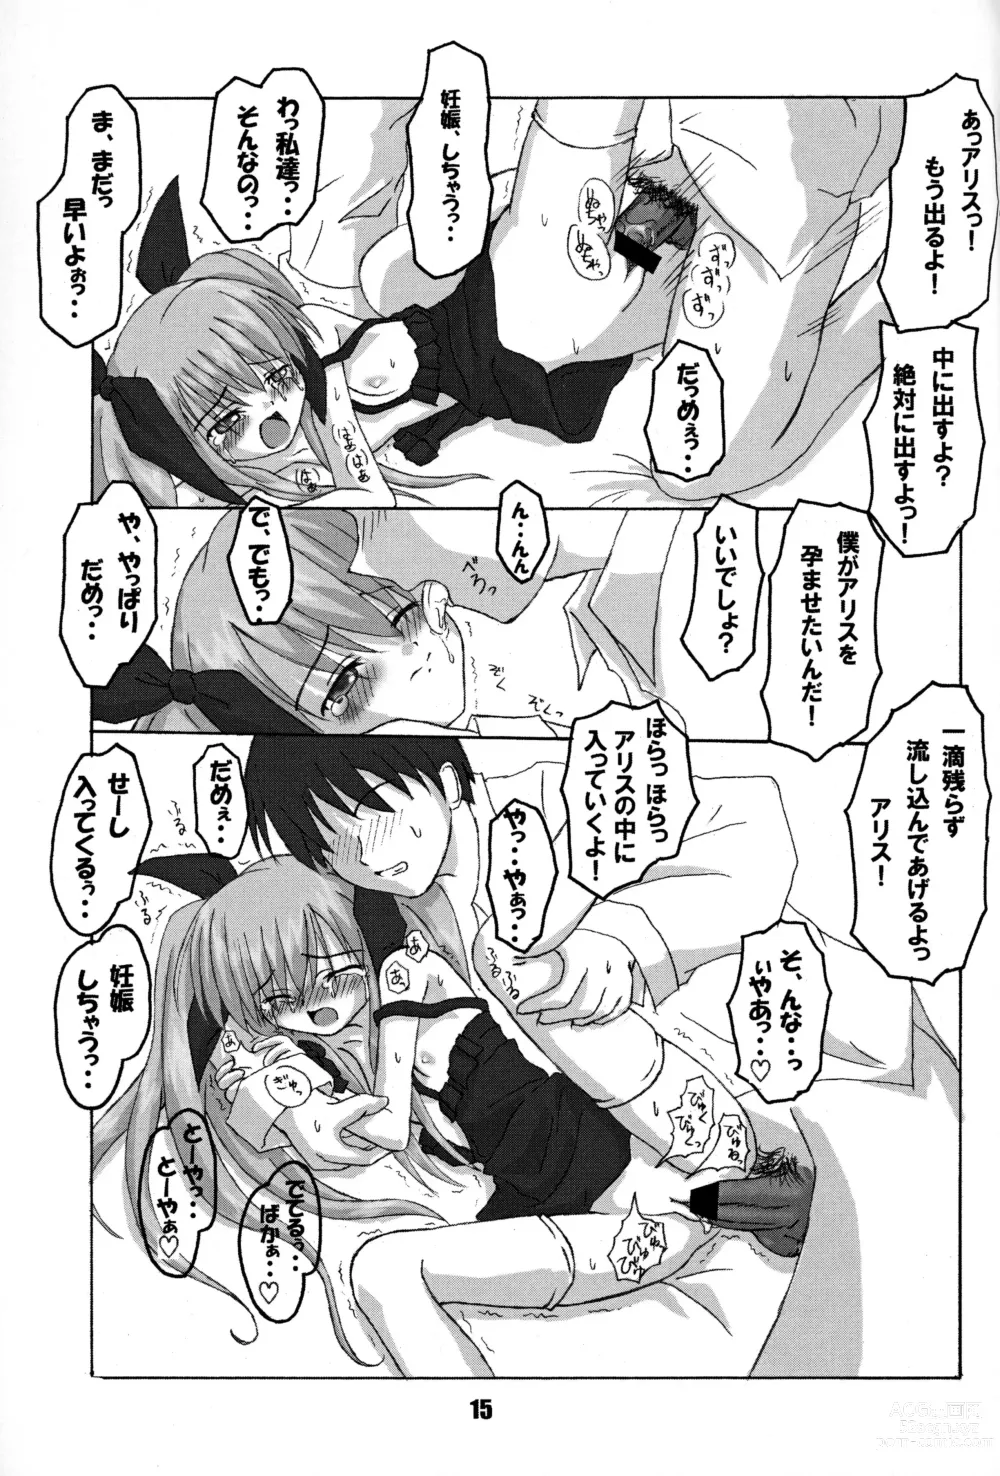 Page 14 of doujinshi Rollin 8